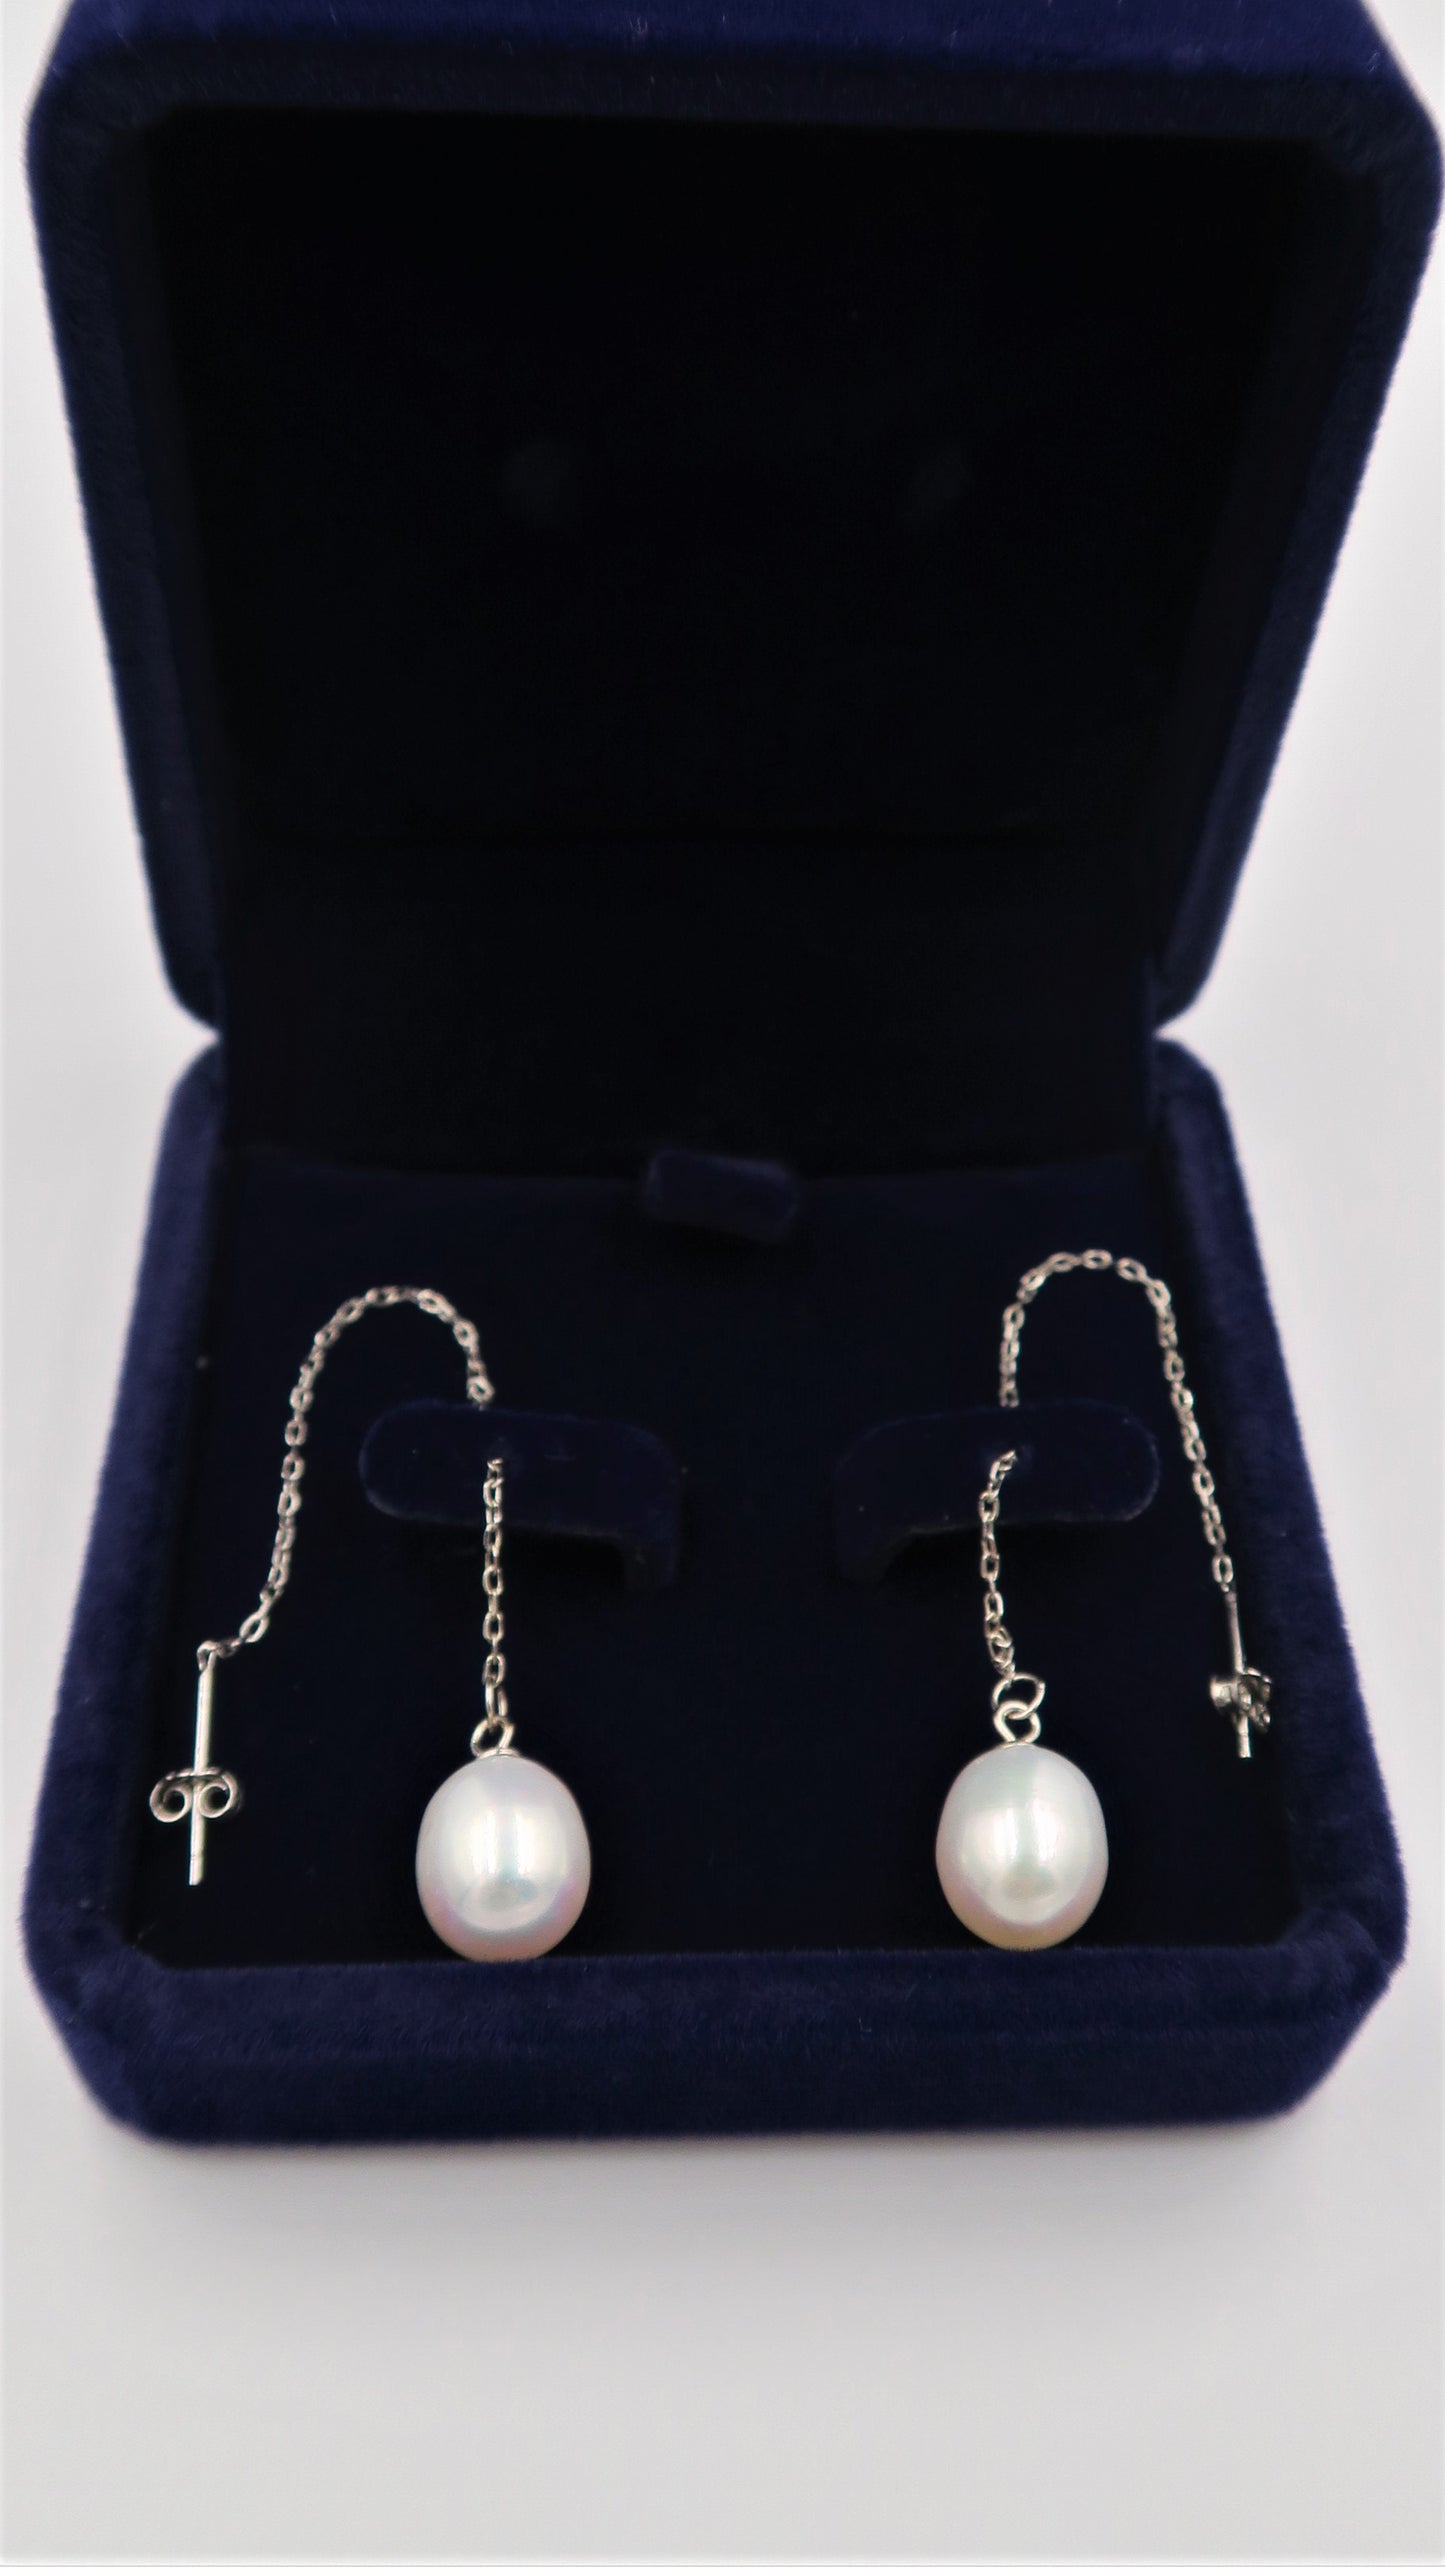 PL - Real Pearl Earrings Celeste White drop dangle Pearls Earring 925 Sterling Silver gift box 8-10mm